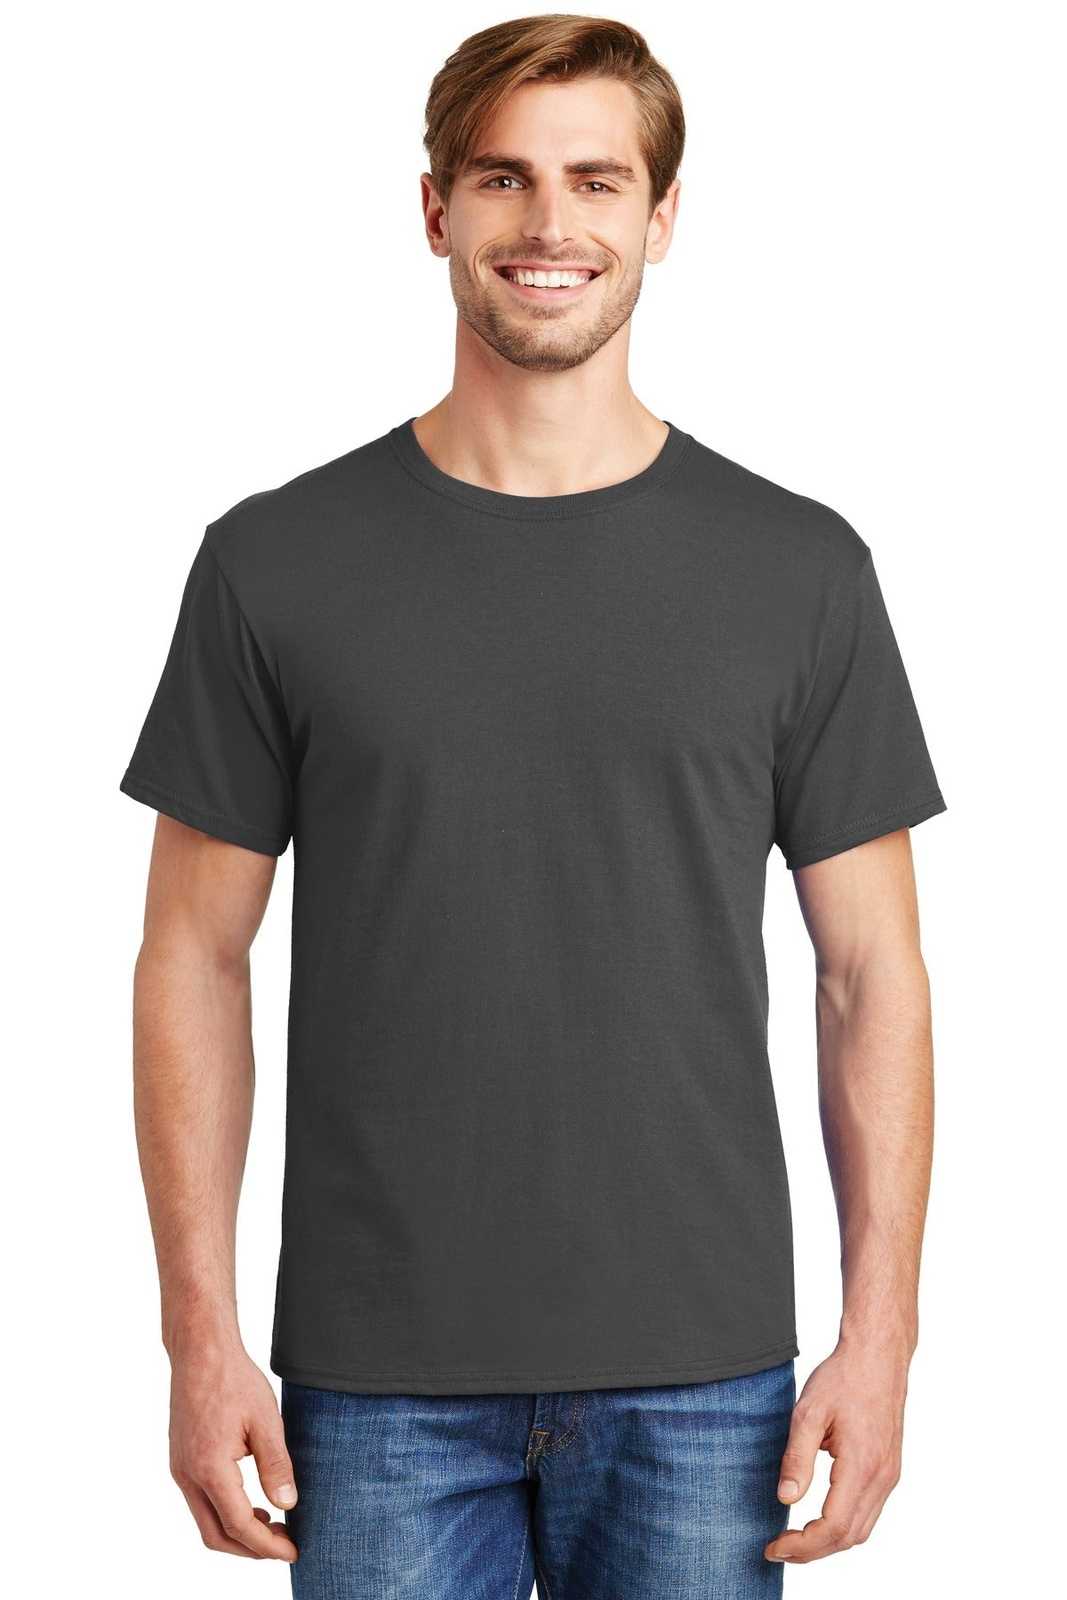 Hanes 5280 ComfortSoft 100% Cotton T-Shirt - Smoke Gray - HIT a Double